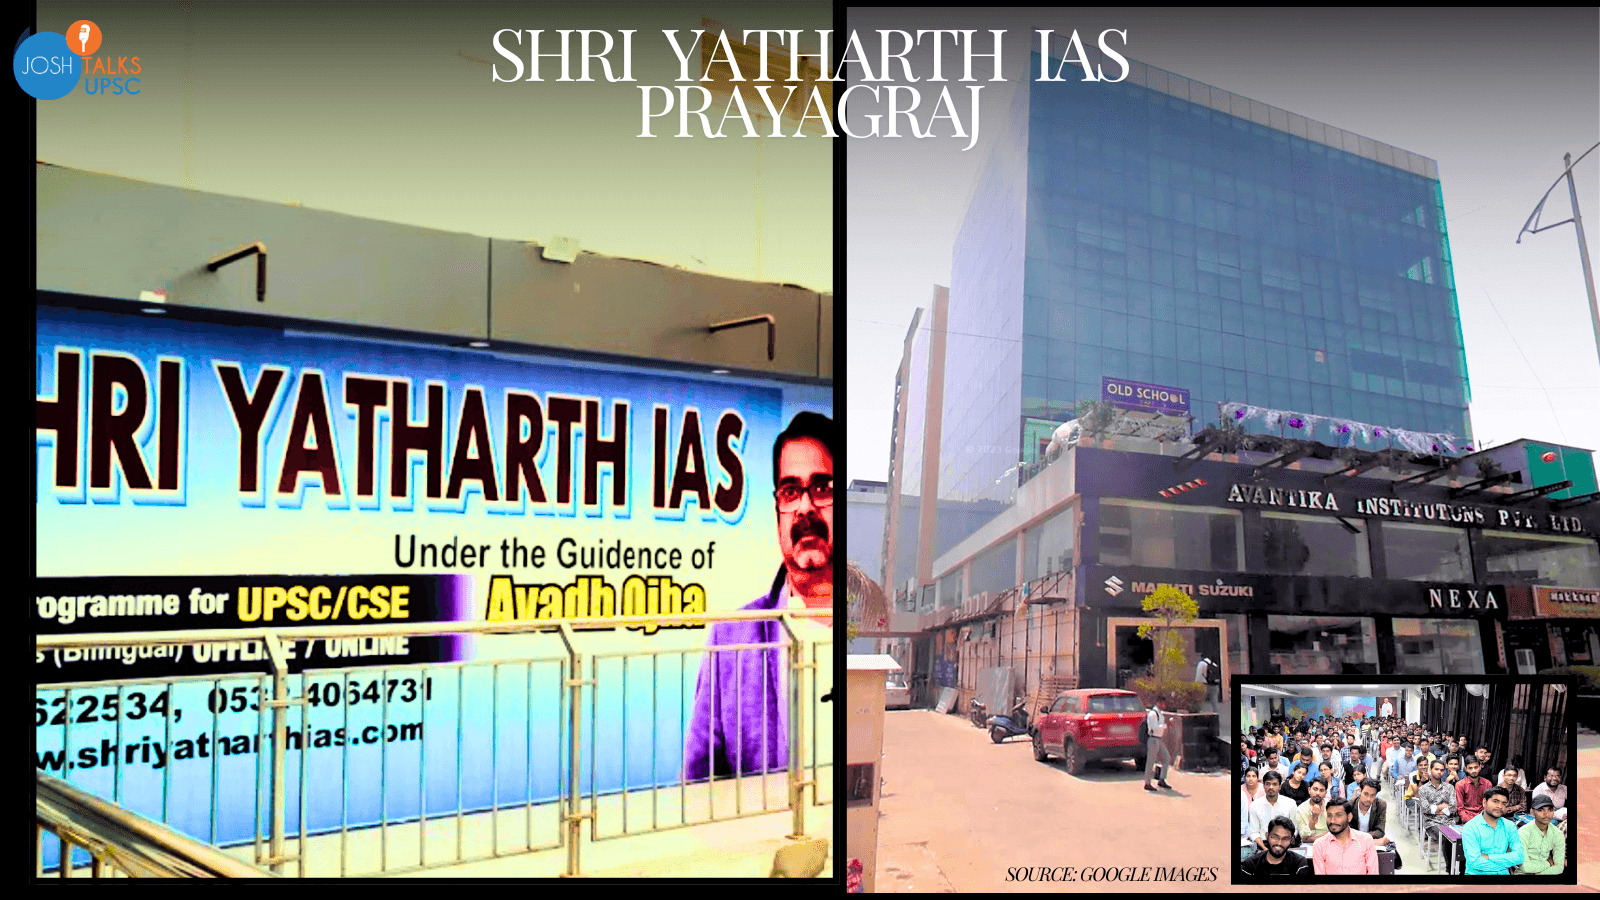 Shri Yatharth IAS photos,[object Object]